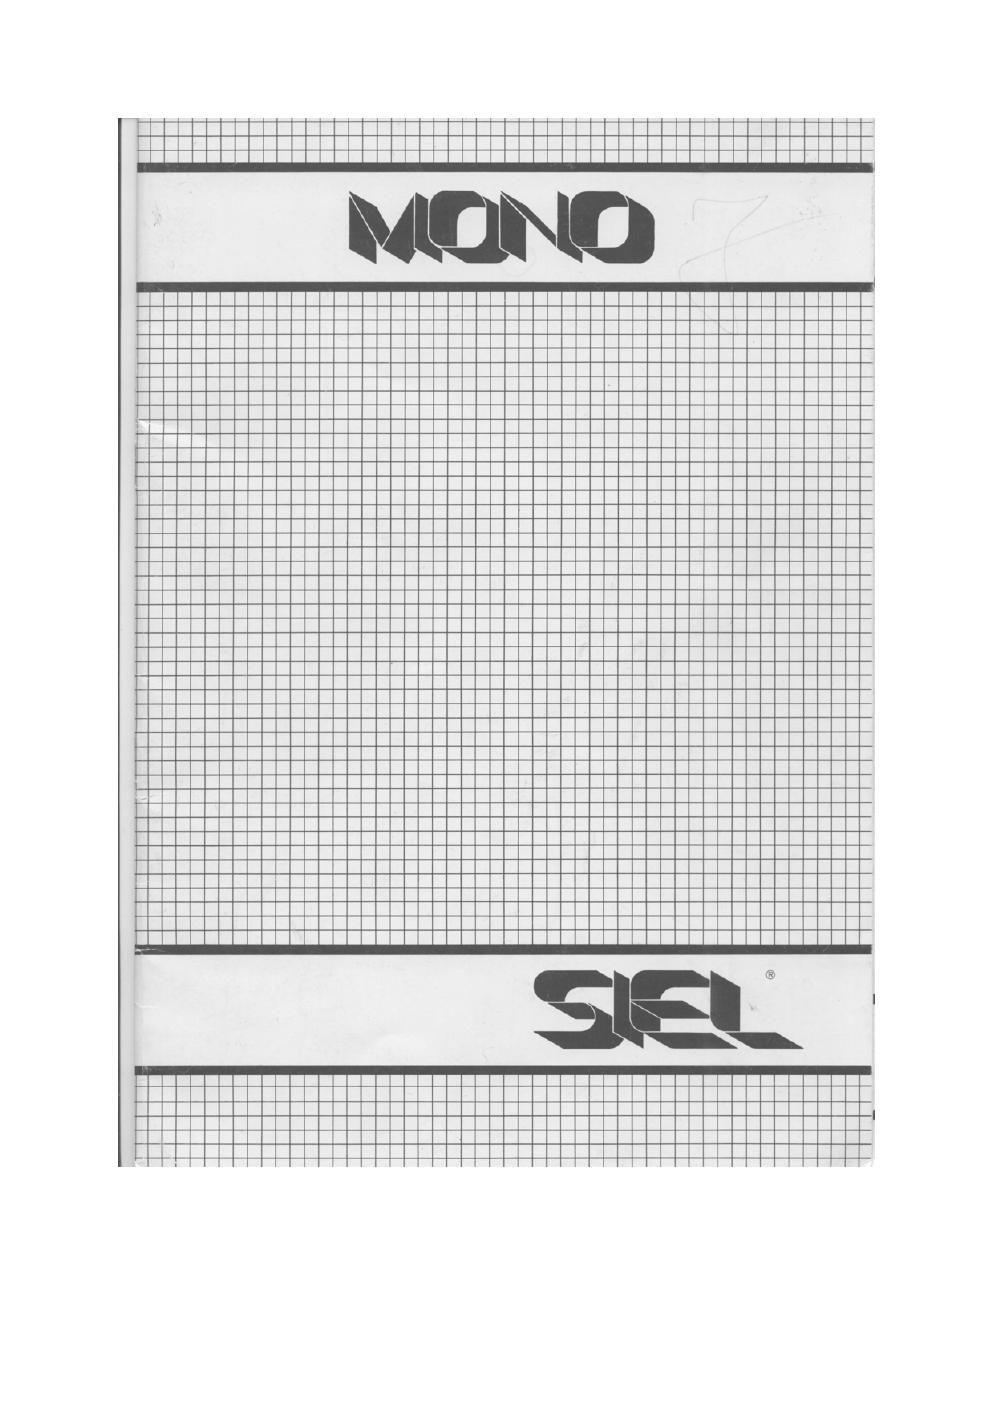 Siel mono owners manual